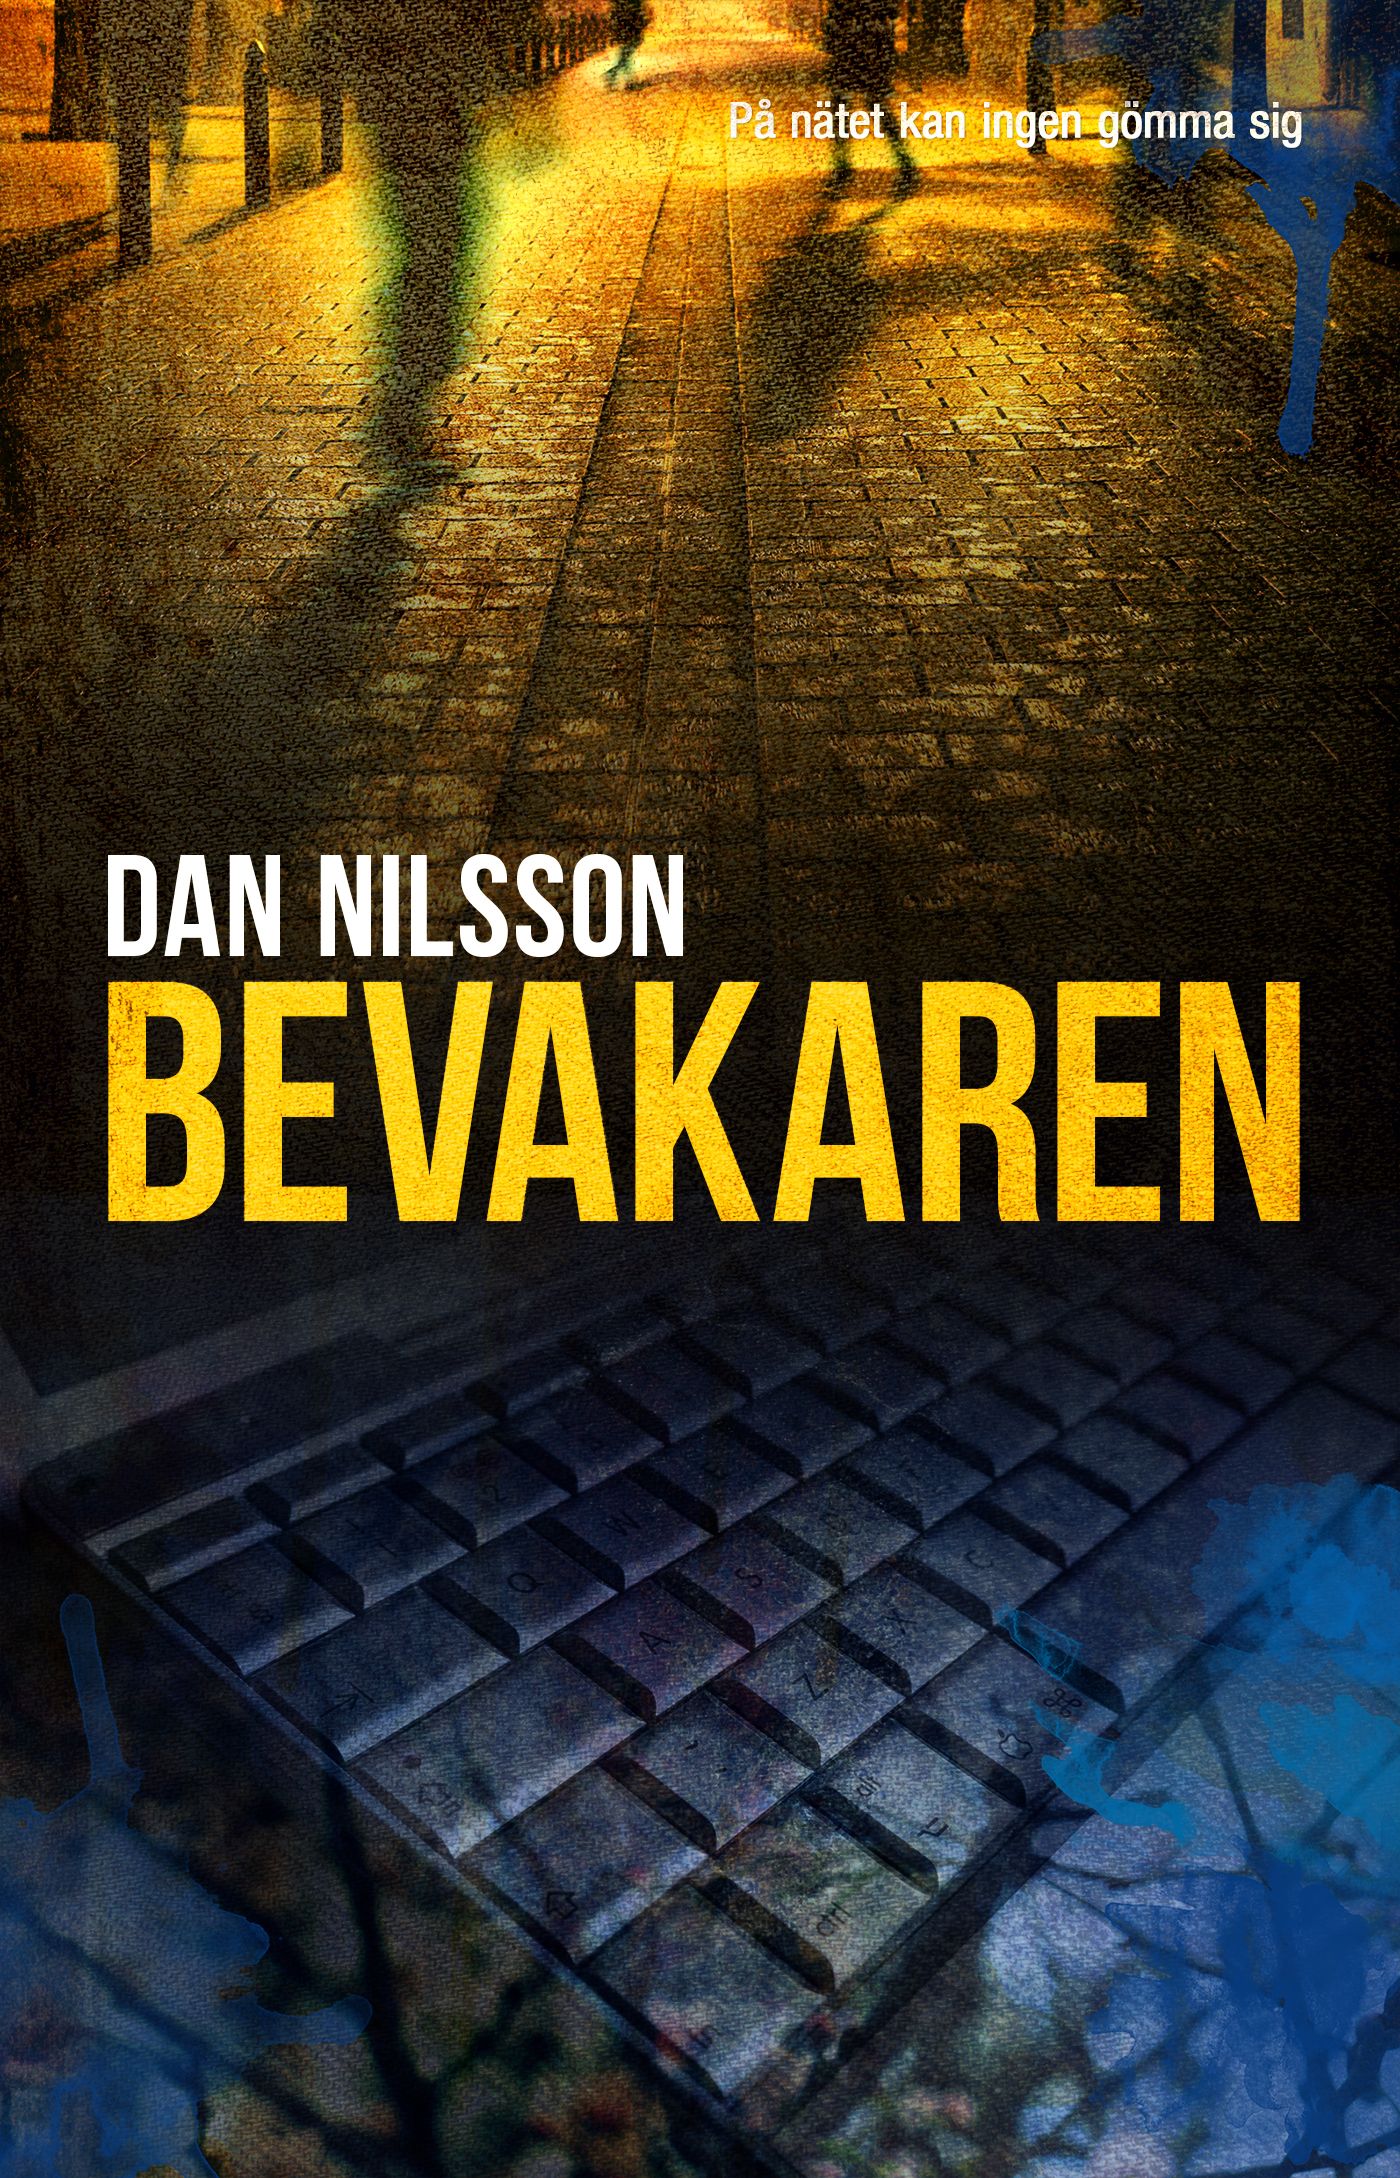 Bevakaren, eBook by Dan Nilsson